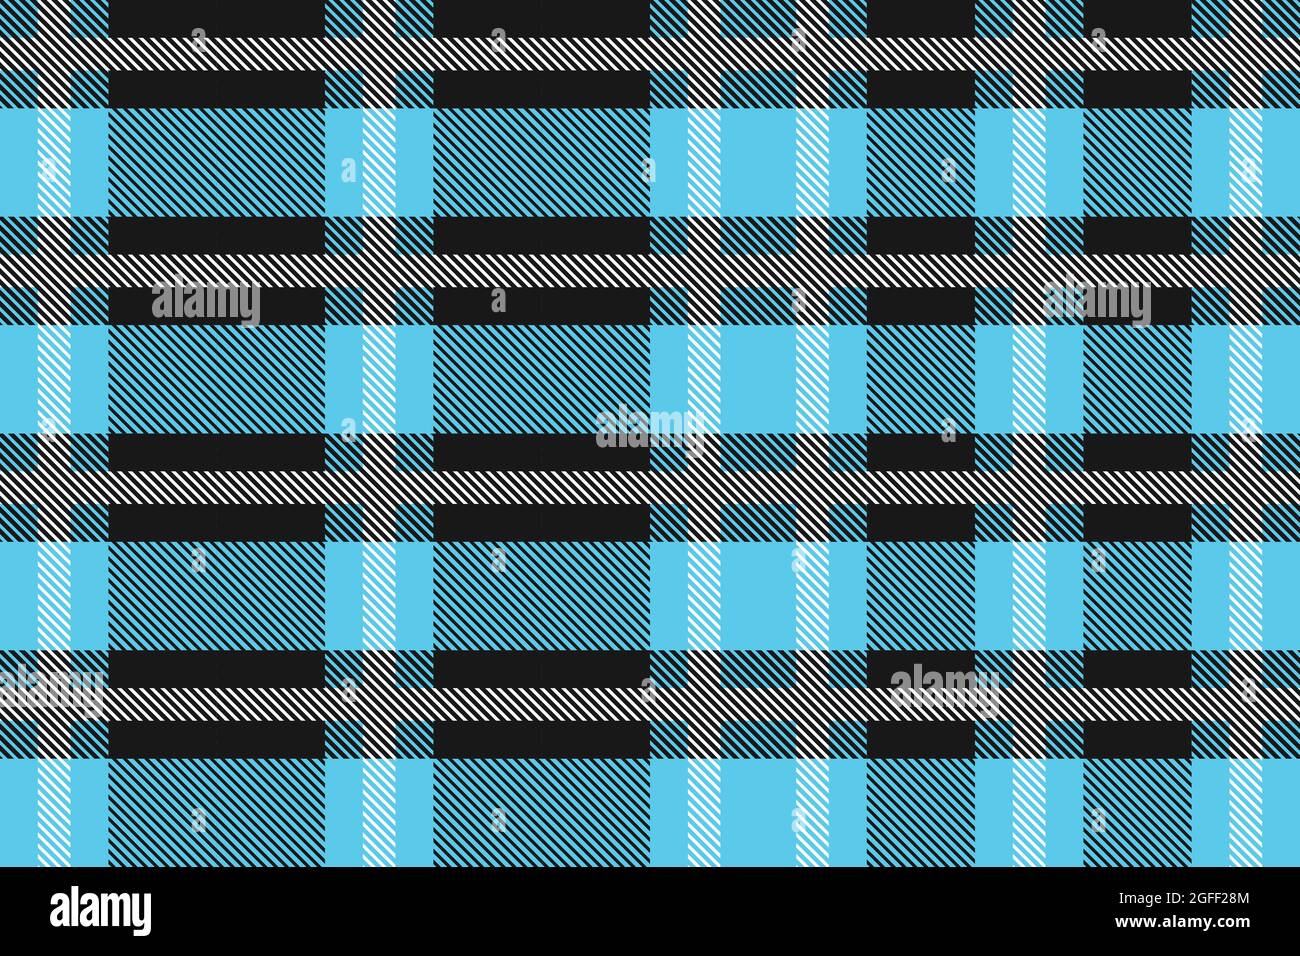 Blue and black tartan plaid seamless pattern Vector Image